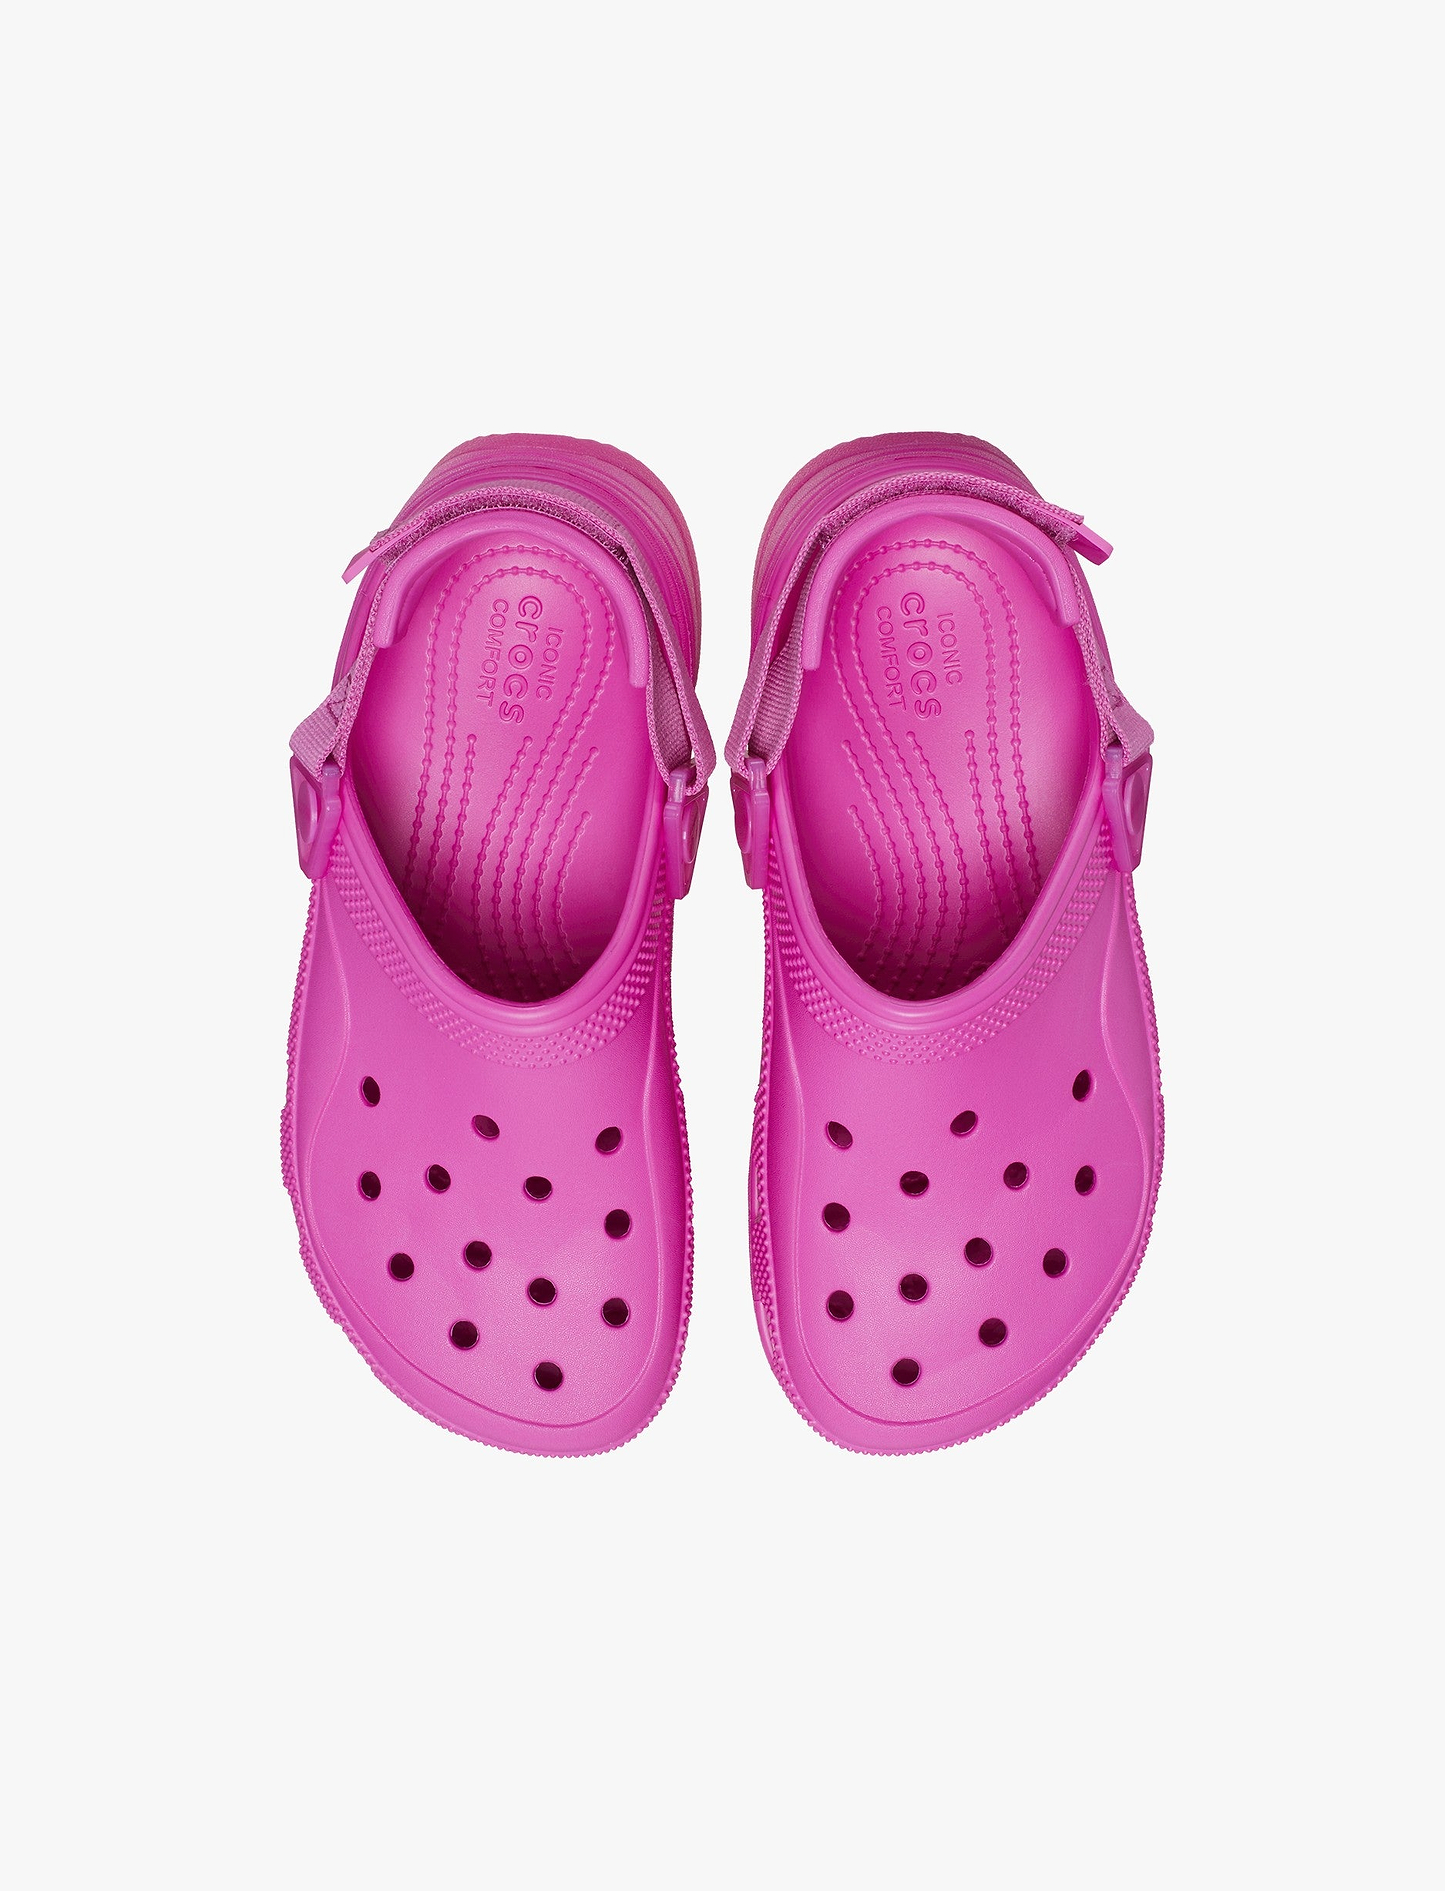 Crocs Hiker Xscape Clogs Unisex Persimmon - כפכפי פלטפורמה גבוהות קרוקס לנשים